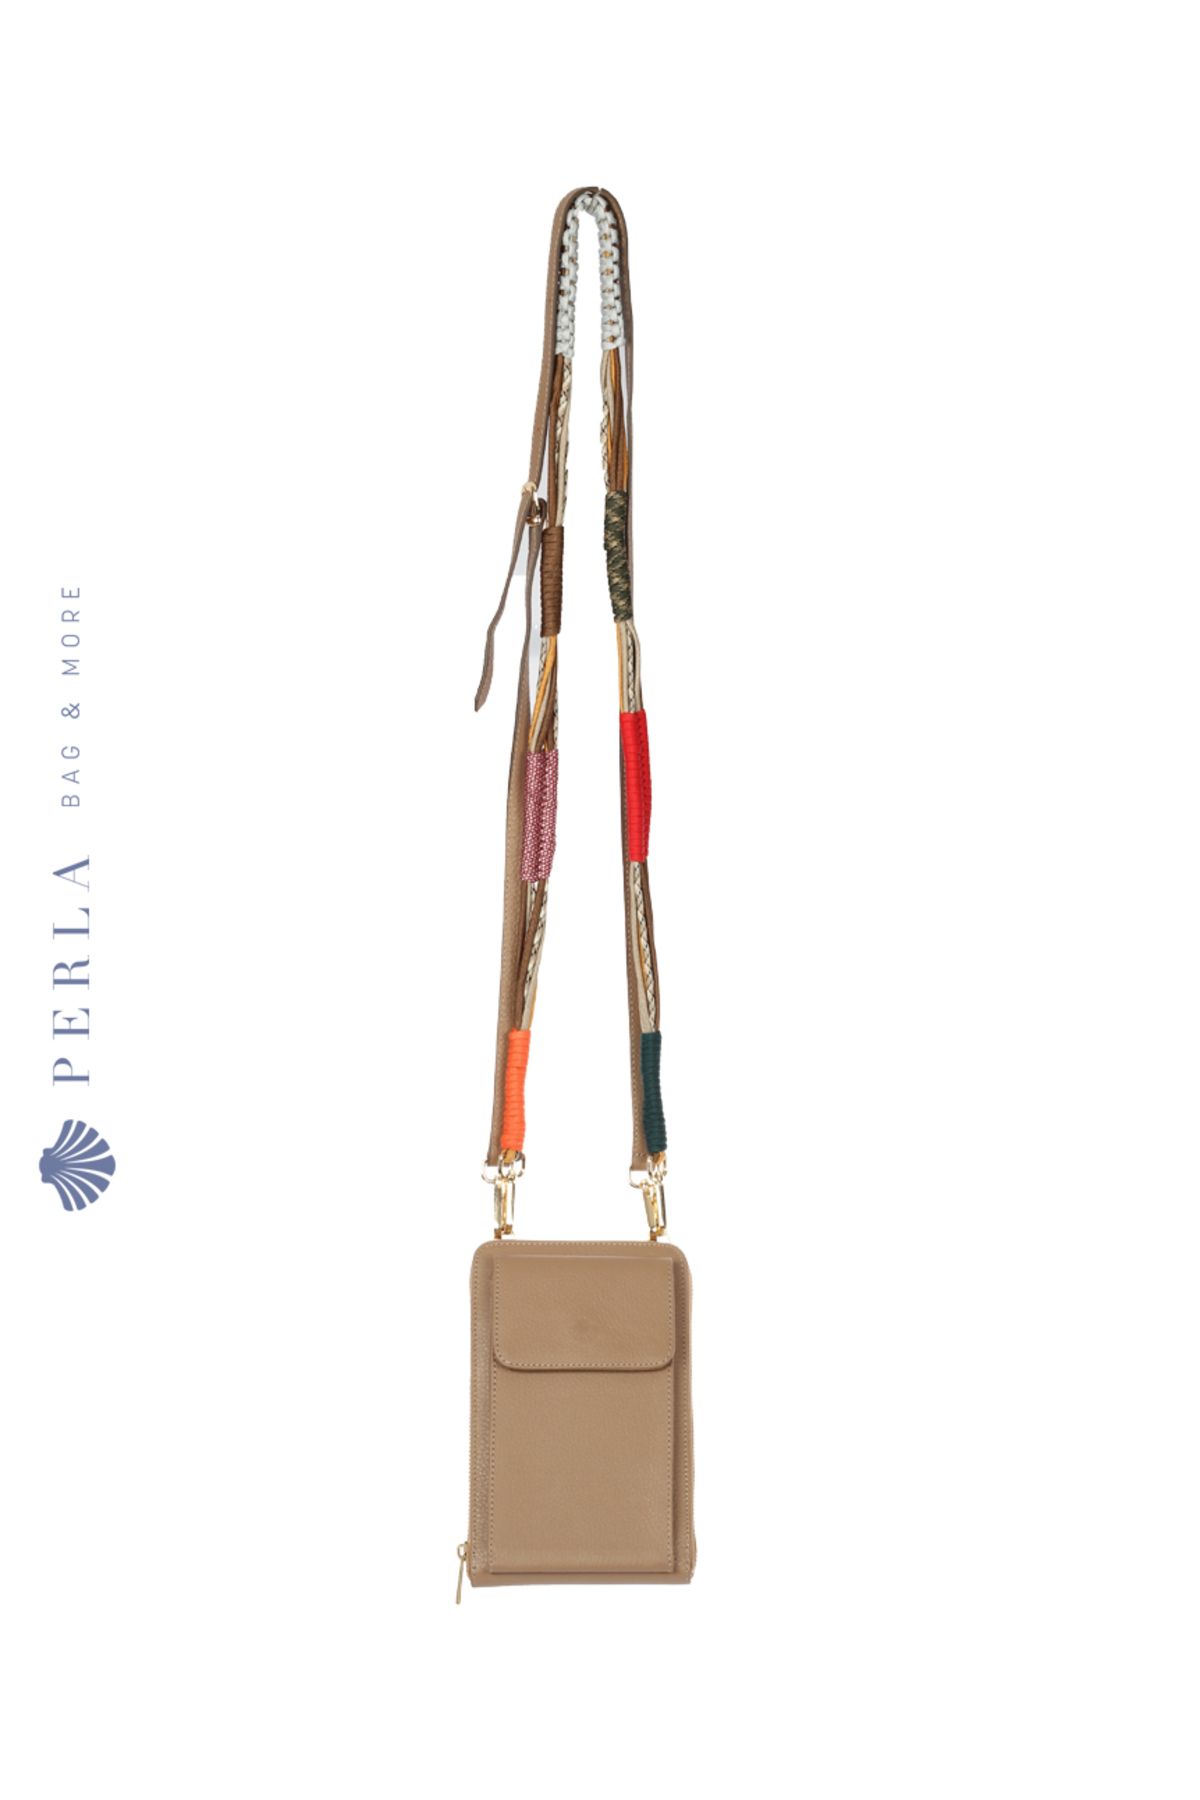 Perla Bag & More Hera Telefonluk - Açık Kahverengi